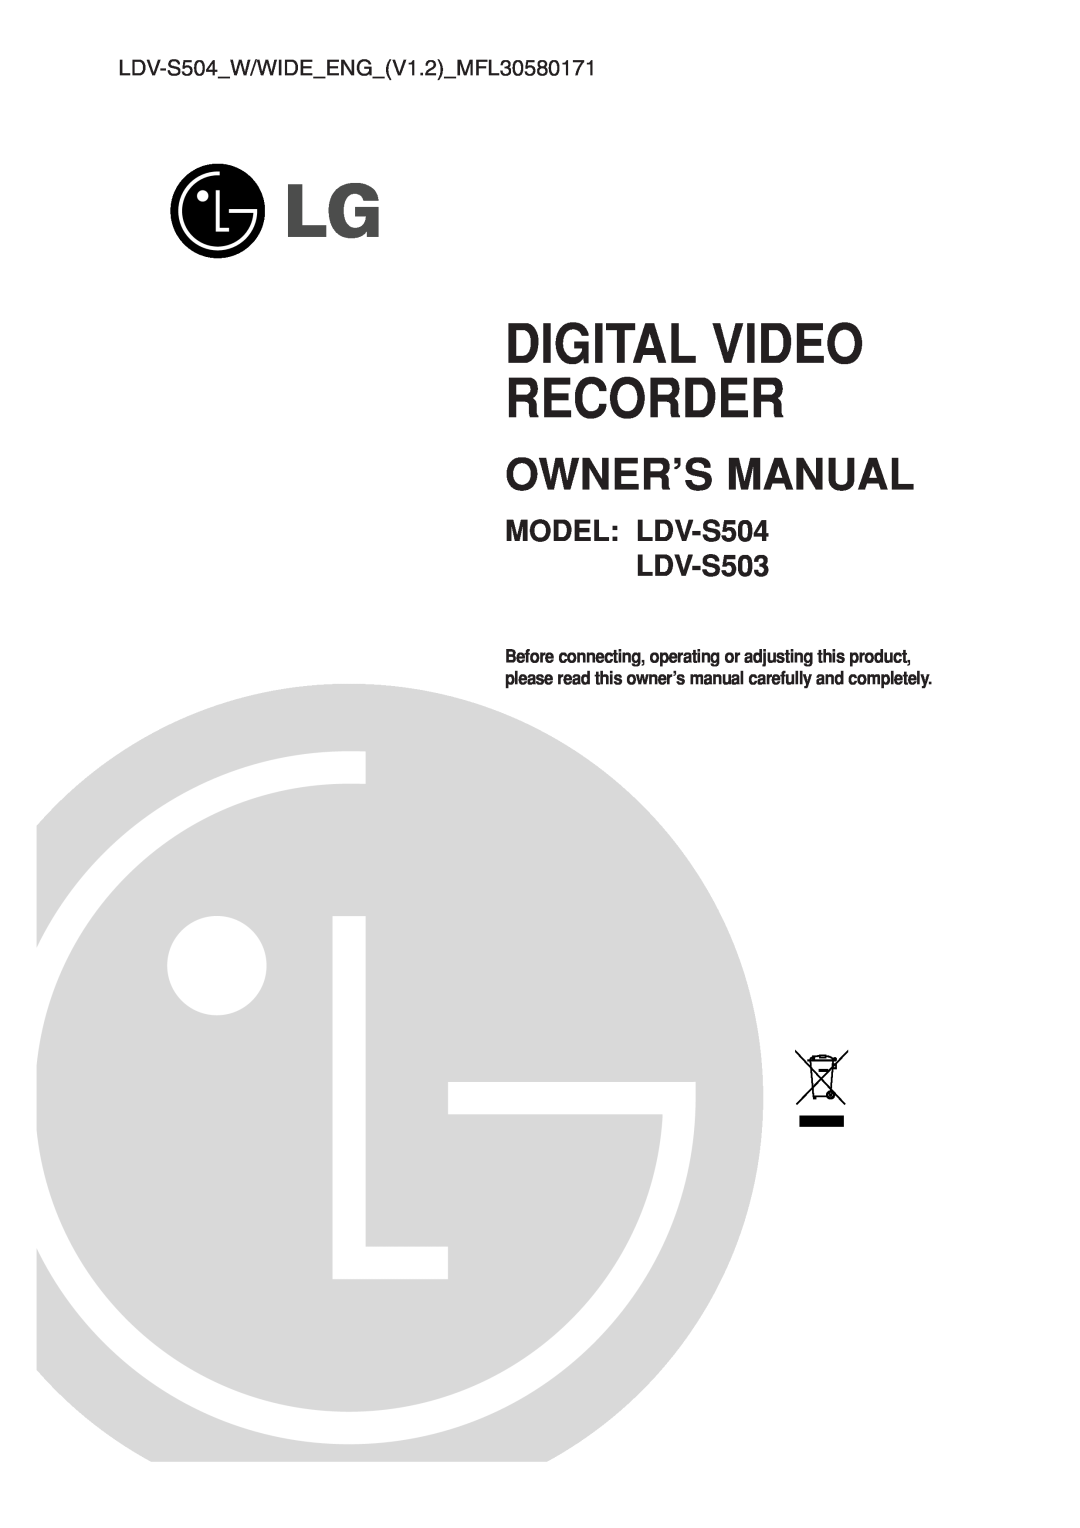 LG Electronics LDV-S503 owner manual Owner’S Manual, LDV-S504W/WIDEENGV1.2MFL30580171, Digital Video Recorder 